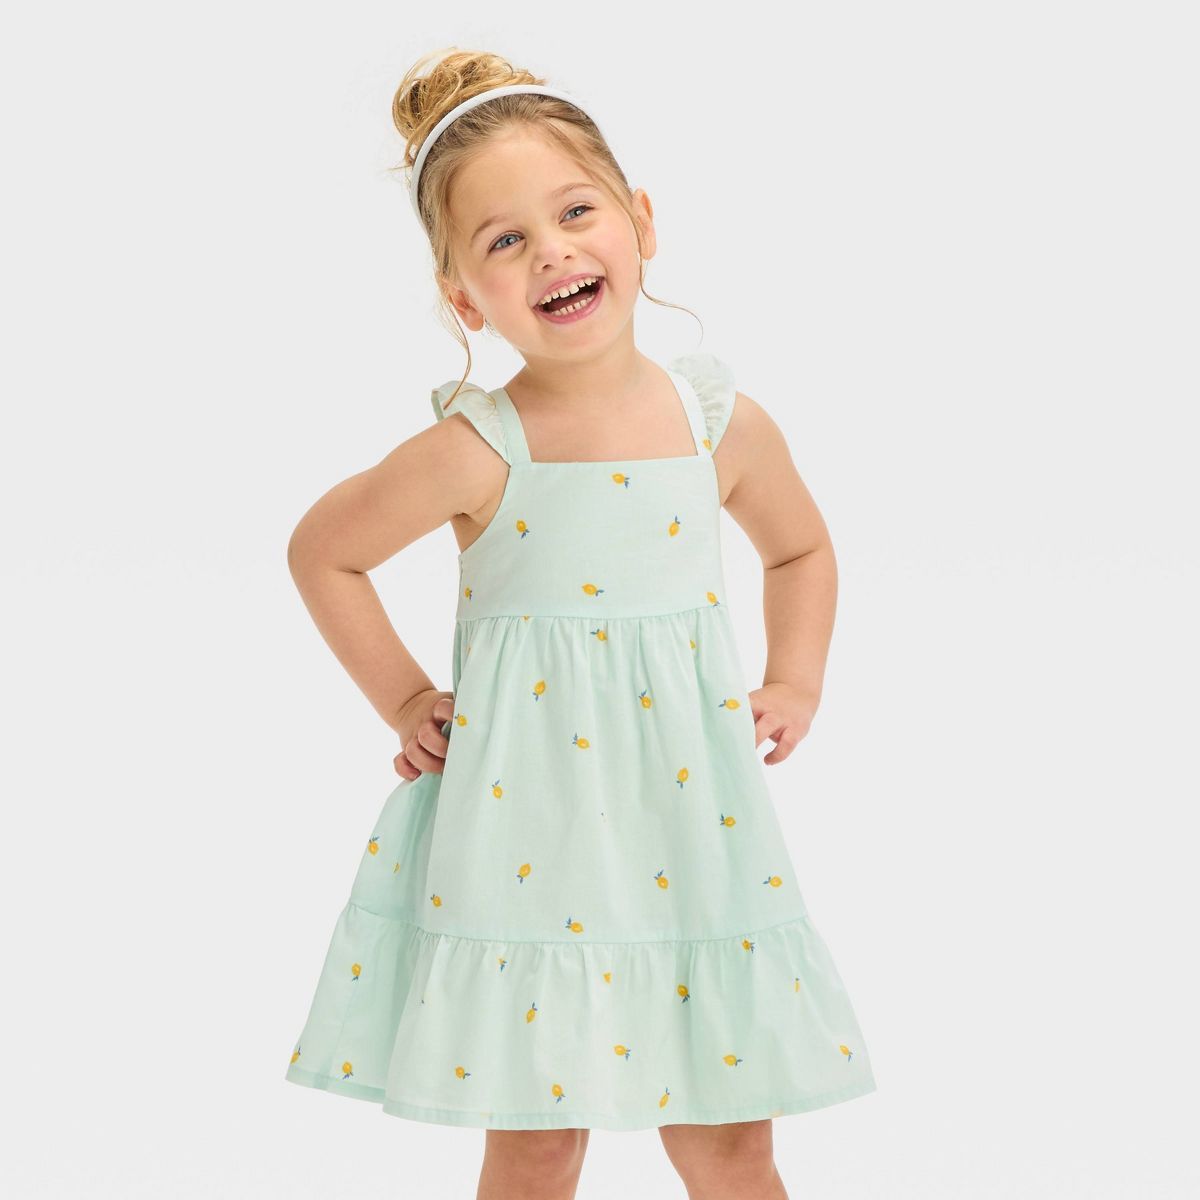 OshKosh B'gosh Toddler Girls' Lemon Dress - Green 12M | Target